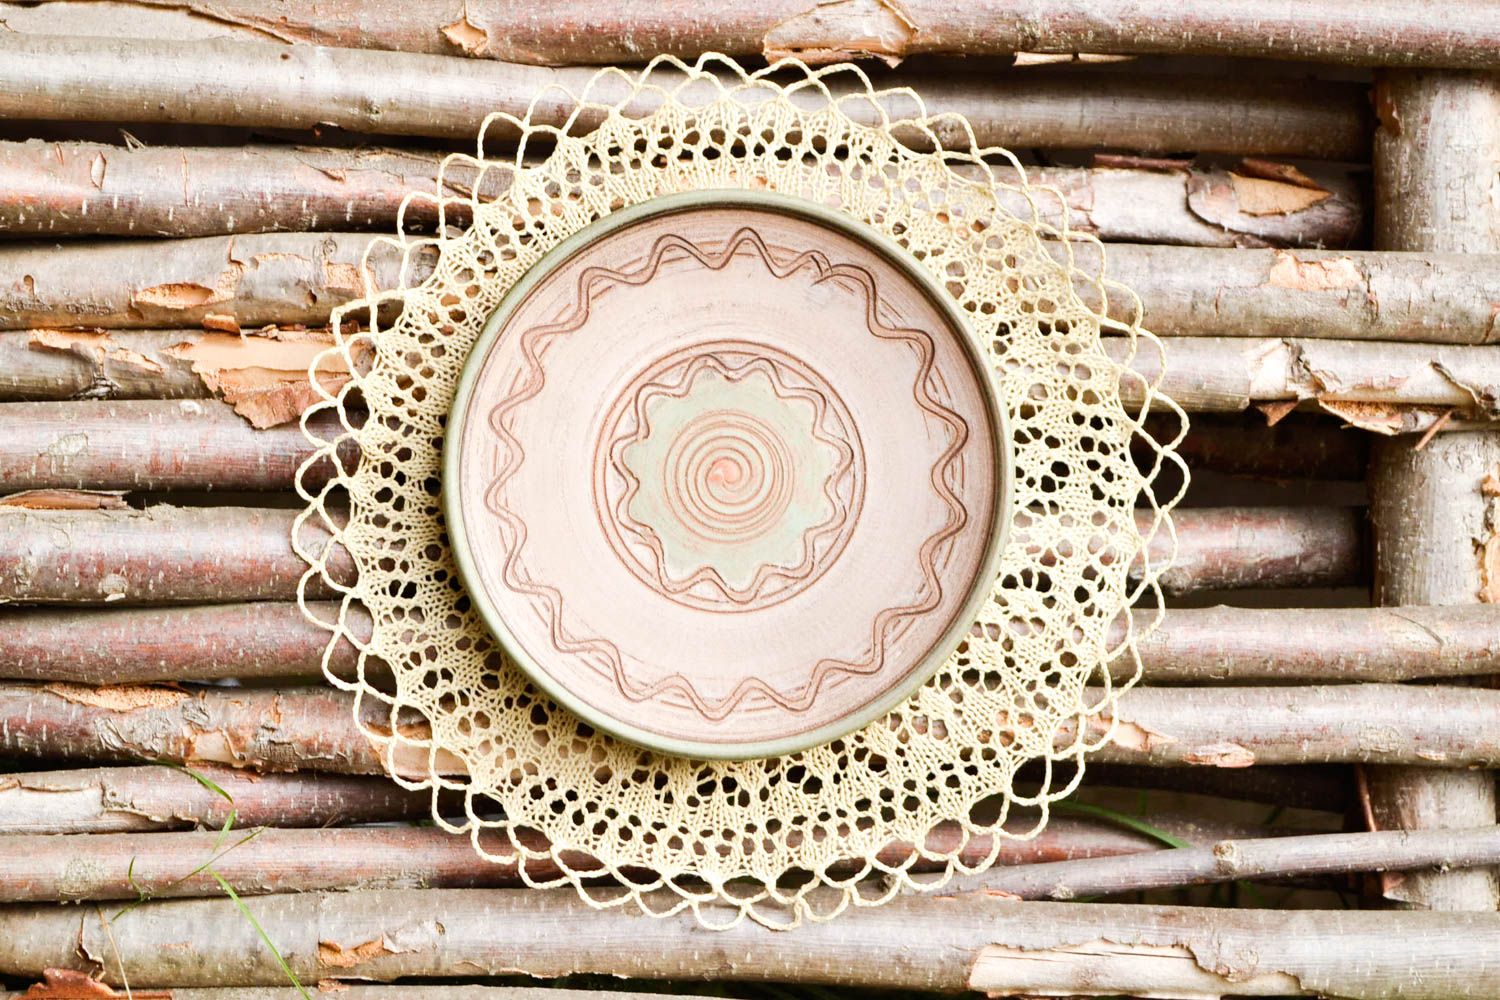 Handmade plate designer plate gift ideas unusual gift kitchen decor clay plate photo 1